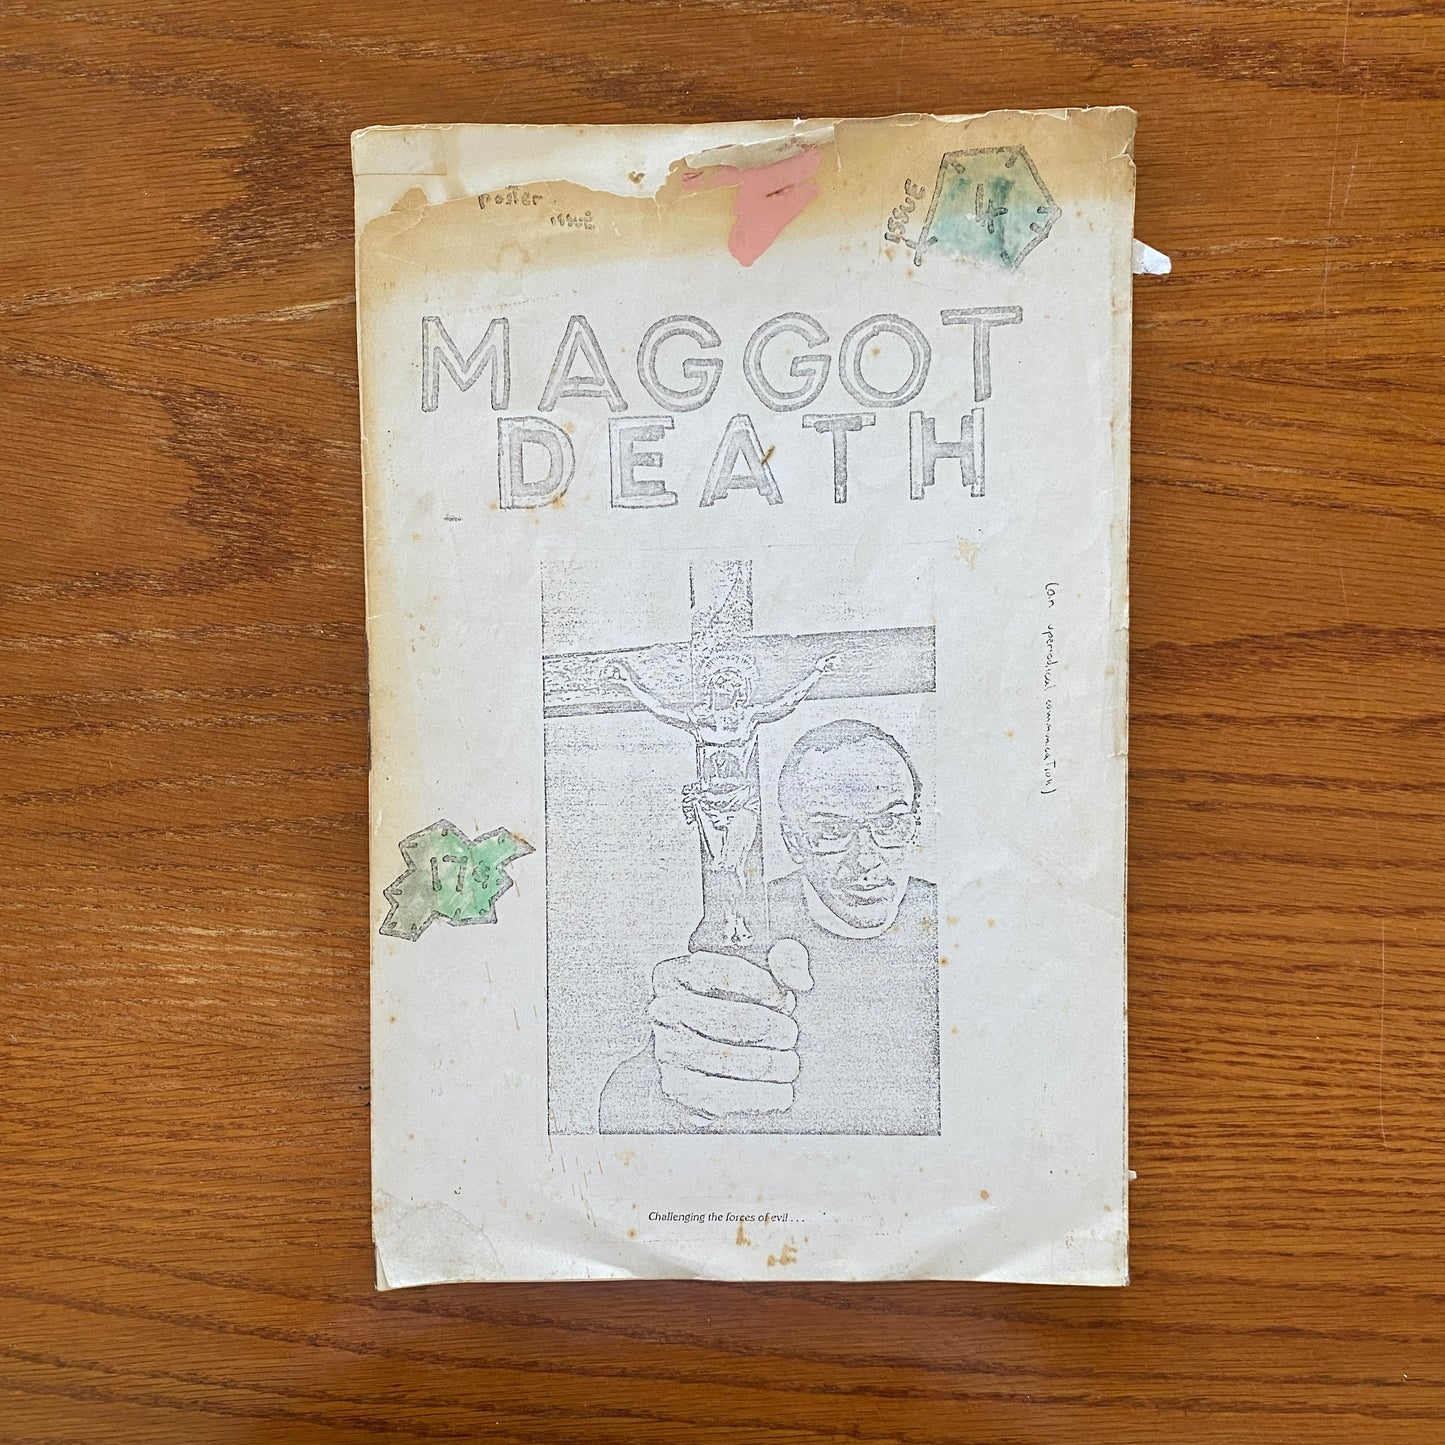 Maggot Death 4